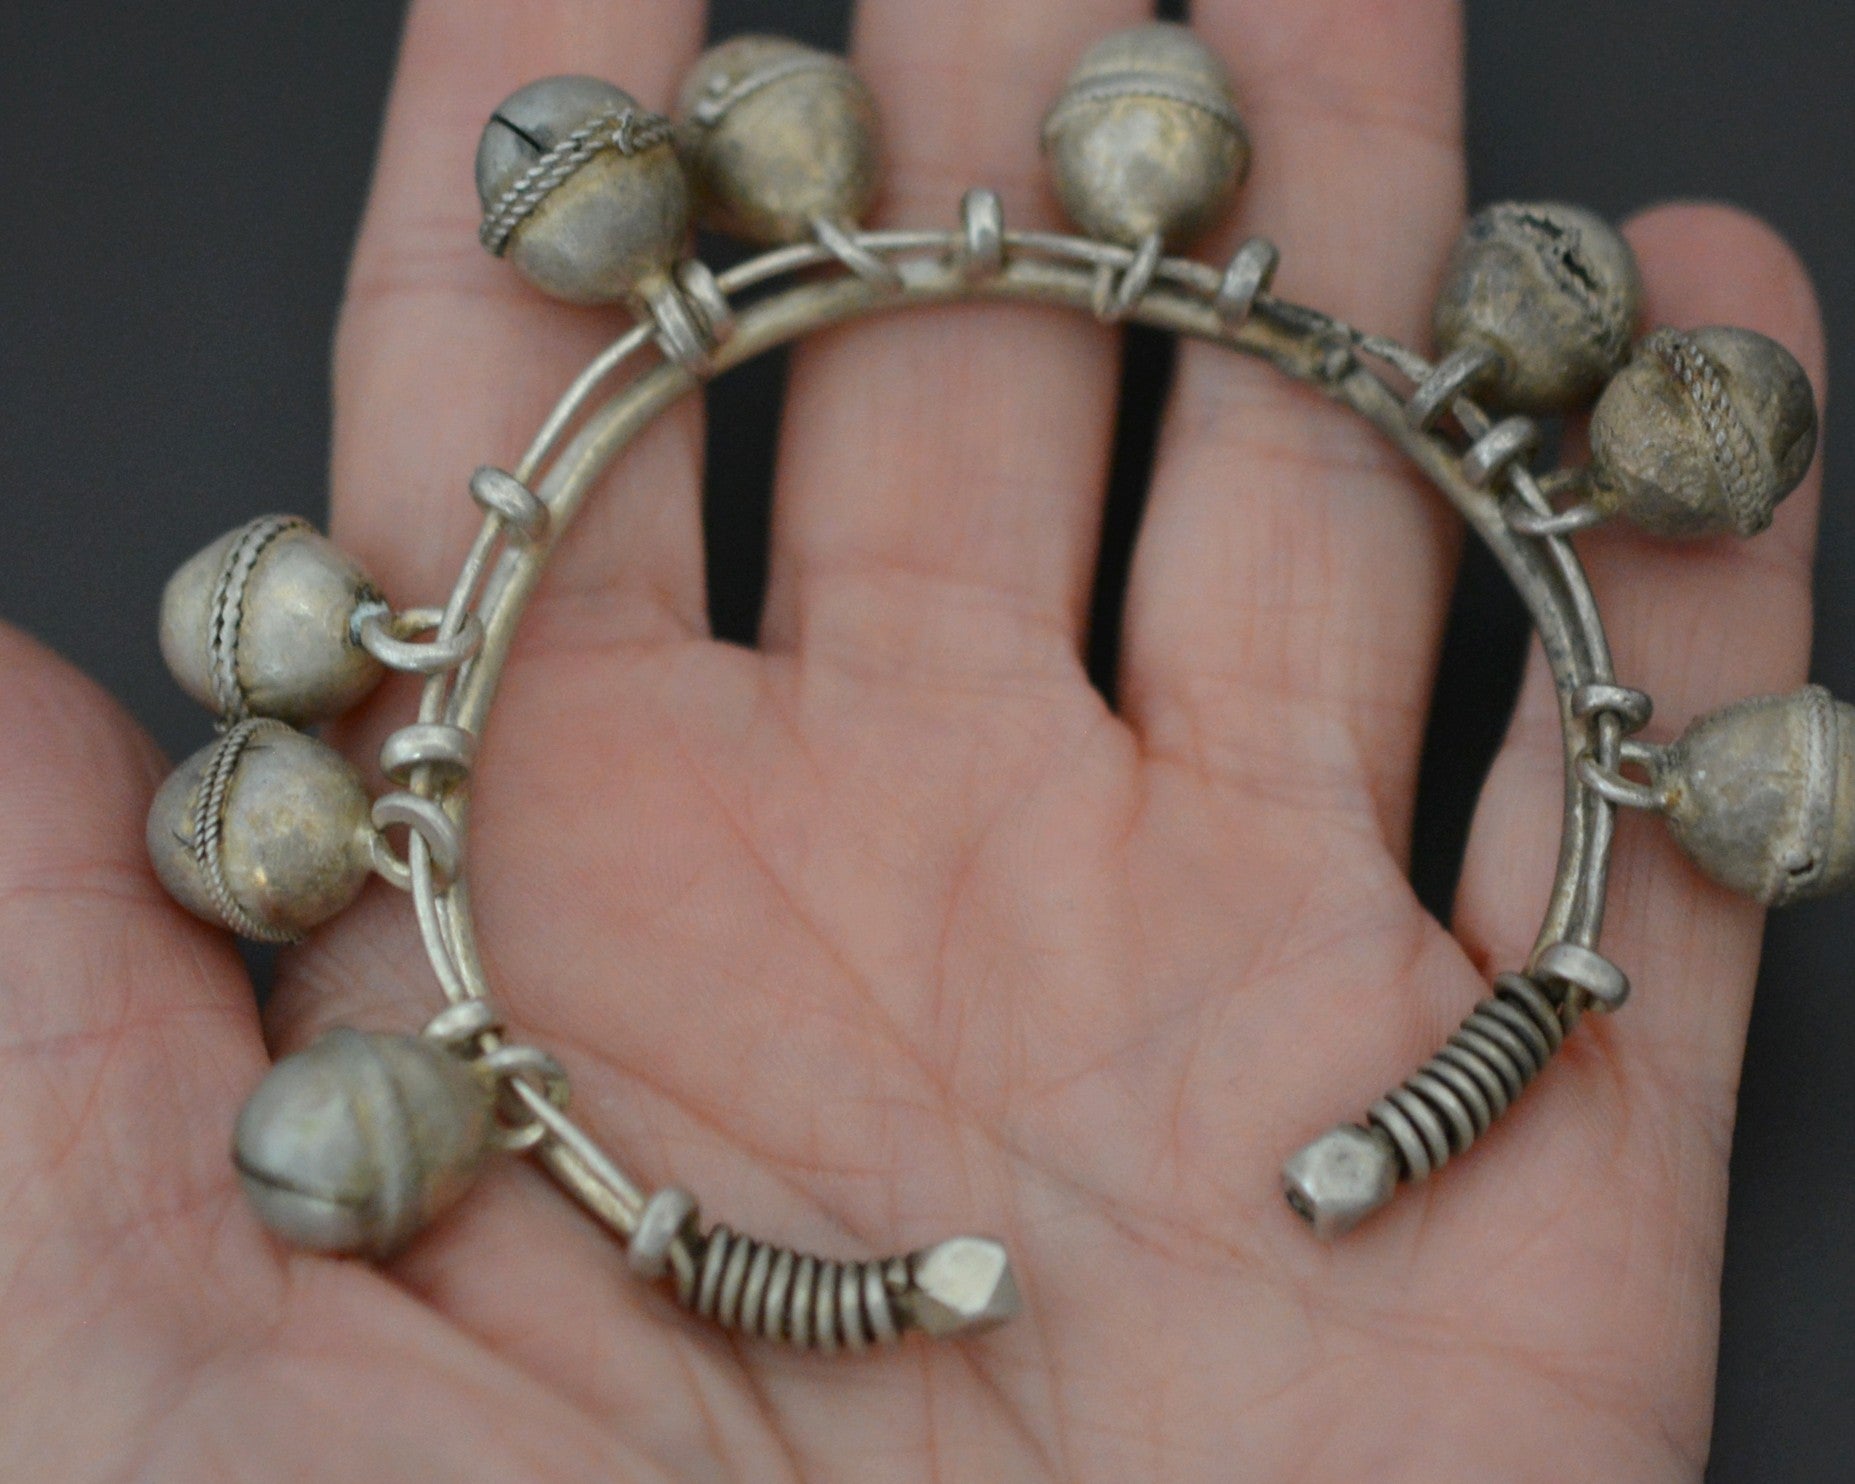 Nubian Zar Cuff Bracelet from Egypt with Bells